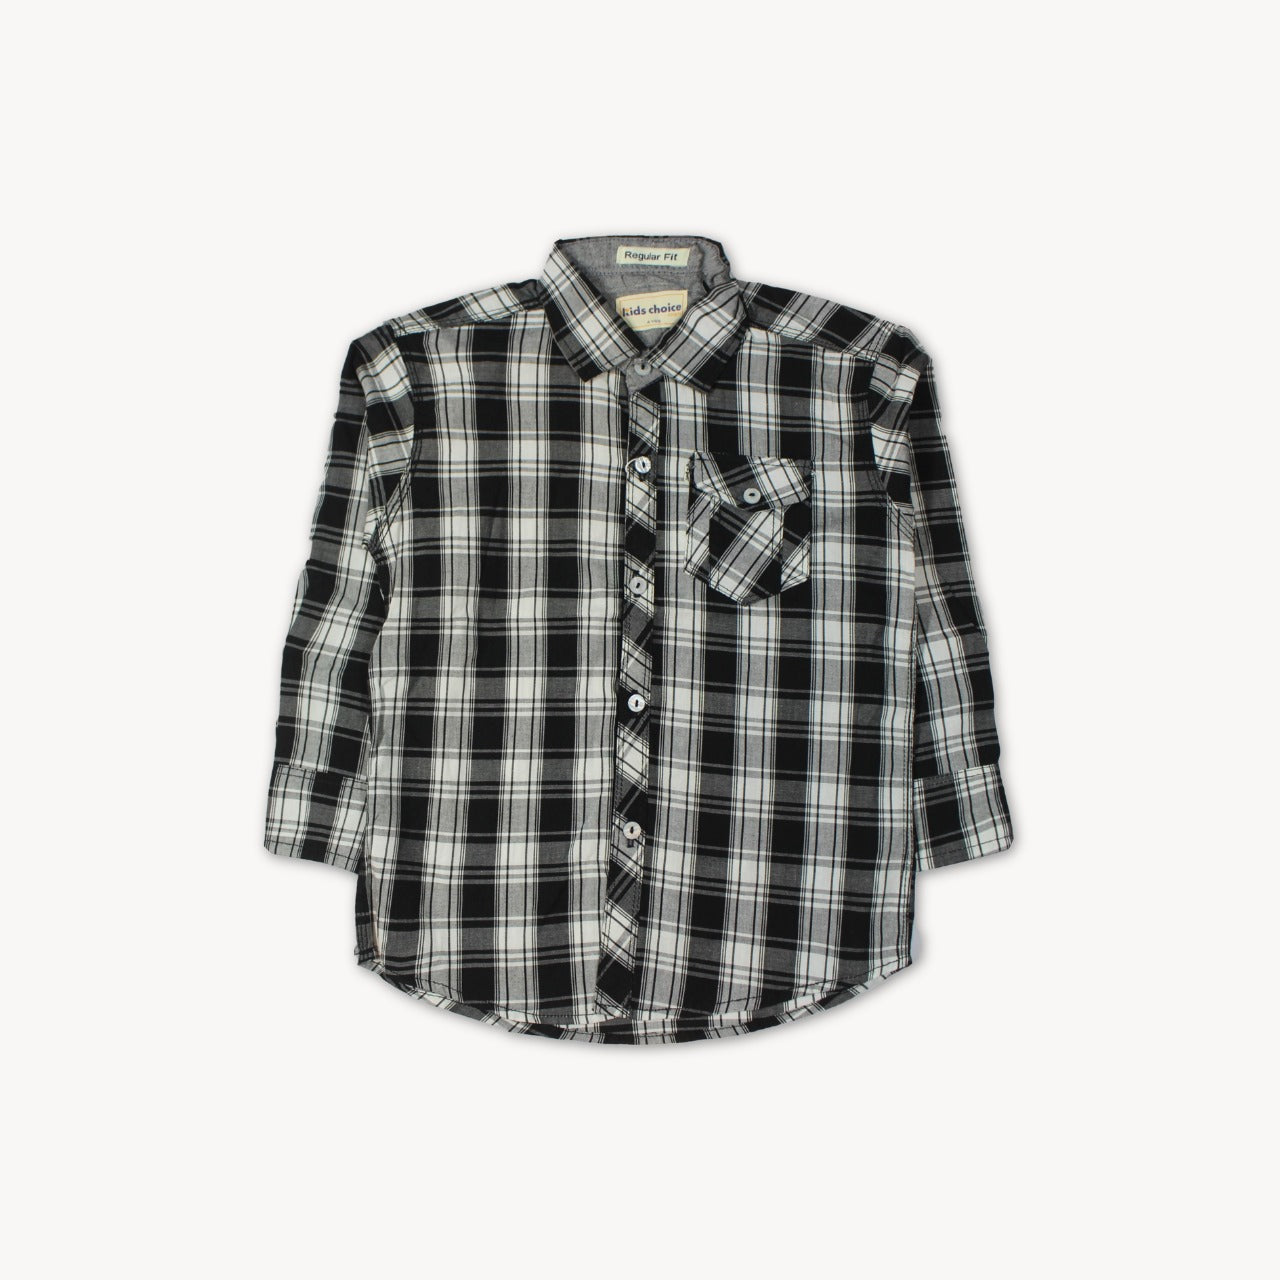 White & Black Checkered Casual Shirt Full Sleeves